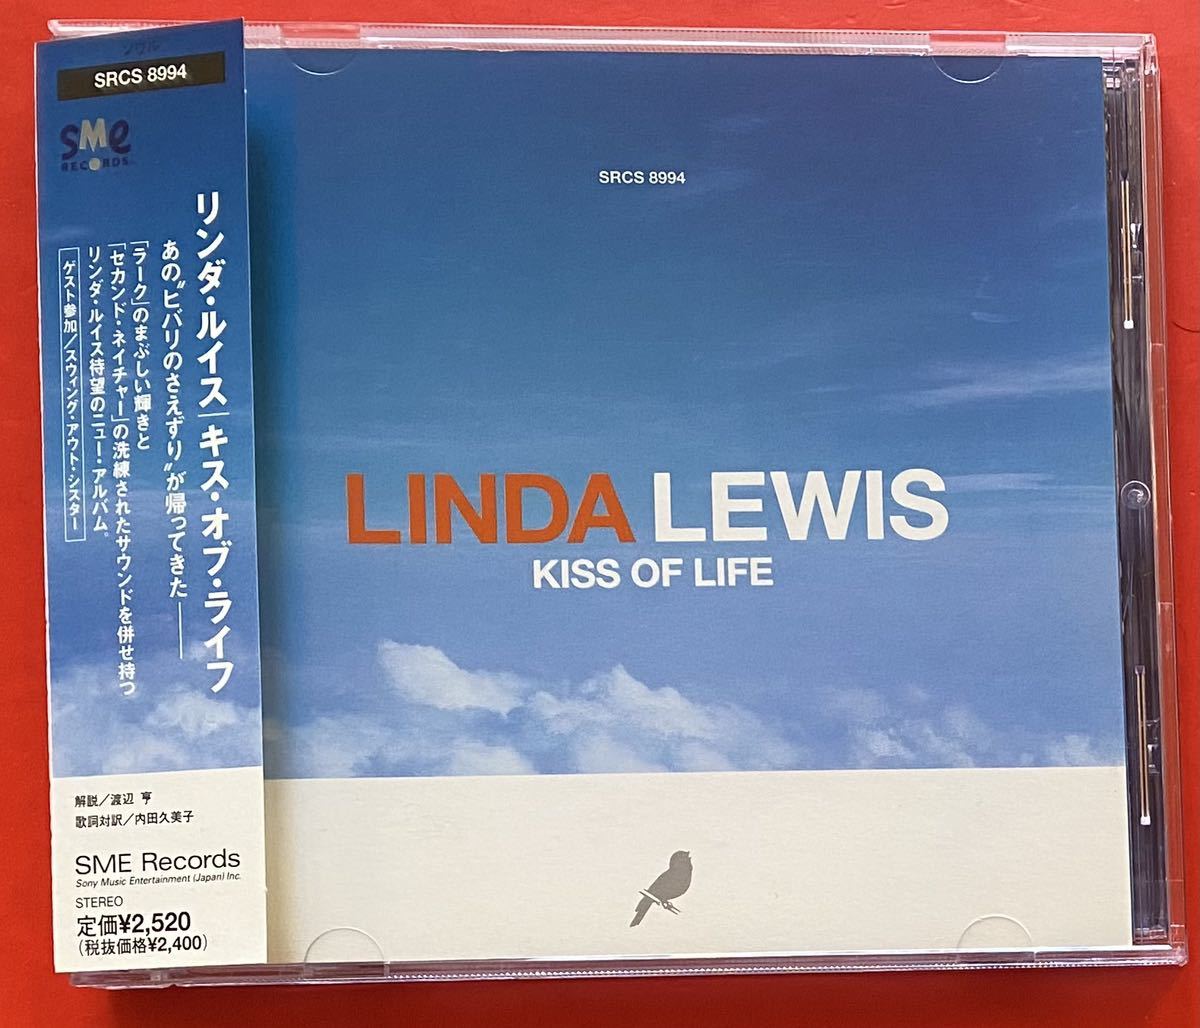 【CD】リンダ・ルイス「KISS OF LIFE」LINDA LEWIS 国内盤 盤面良好 [09170179].の画像1